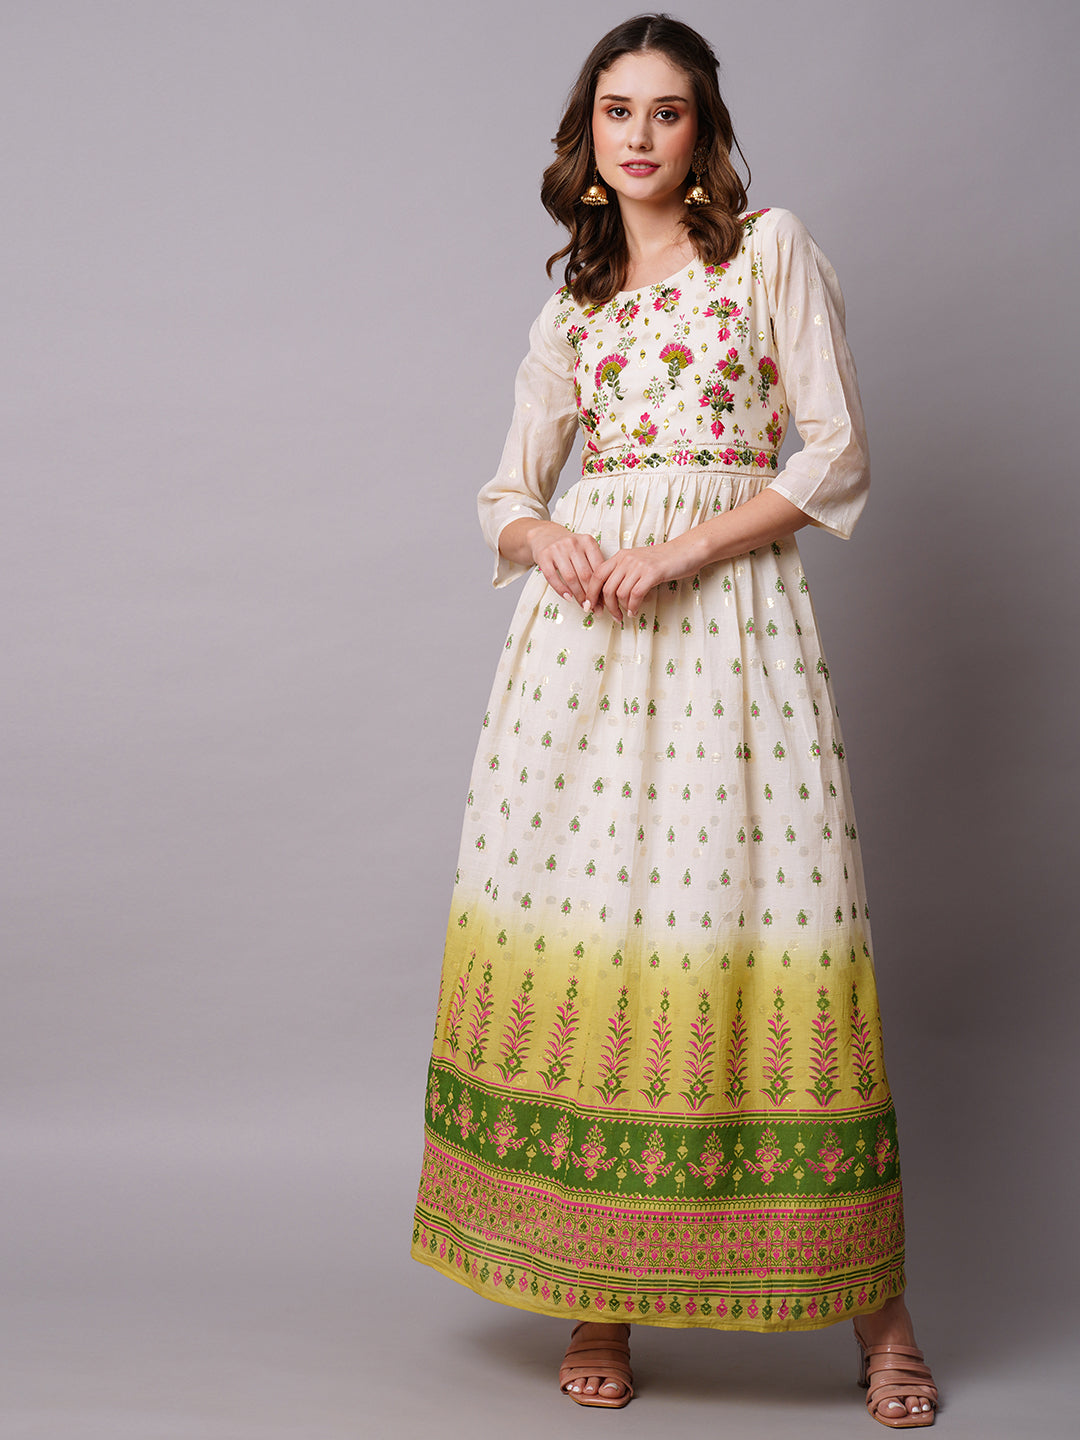 Maxi Dress Sewing Pattern - Halter Dress Pattern | Gina Renee Designs